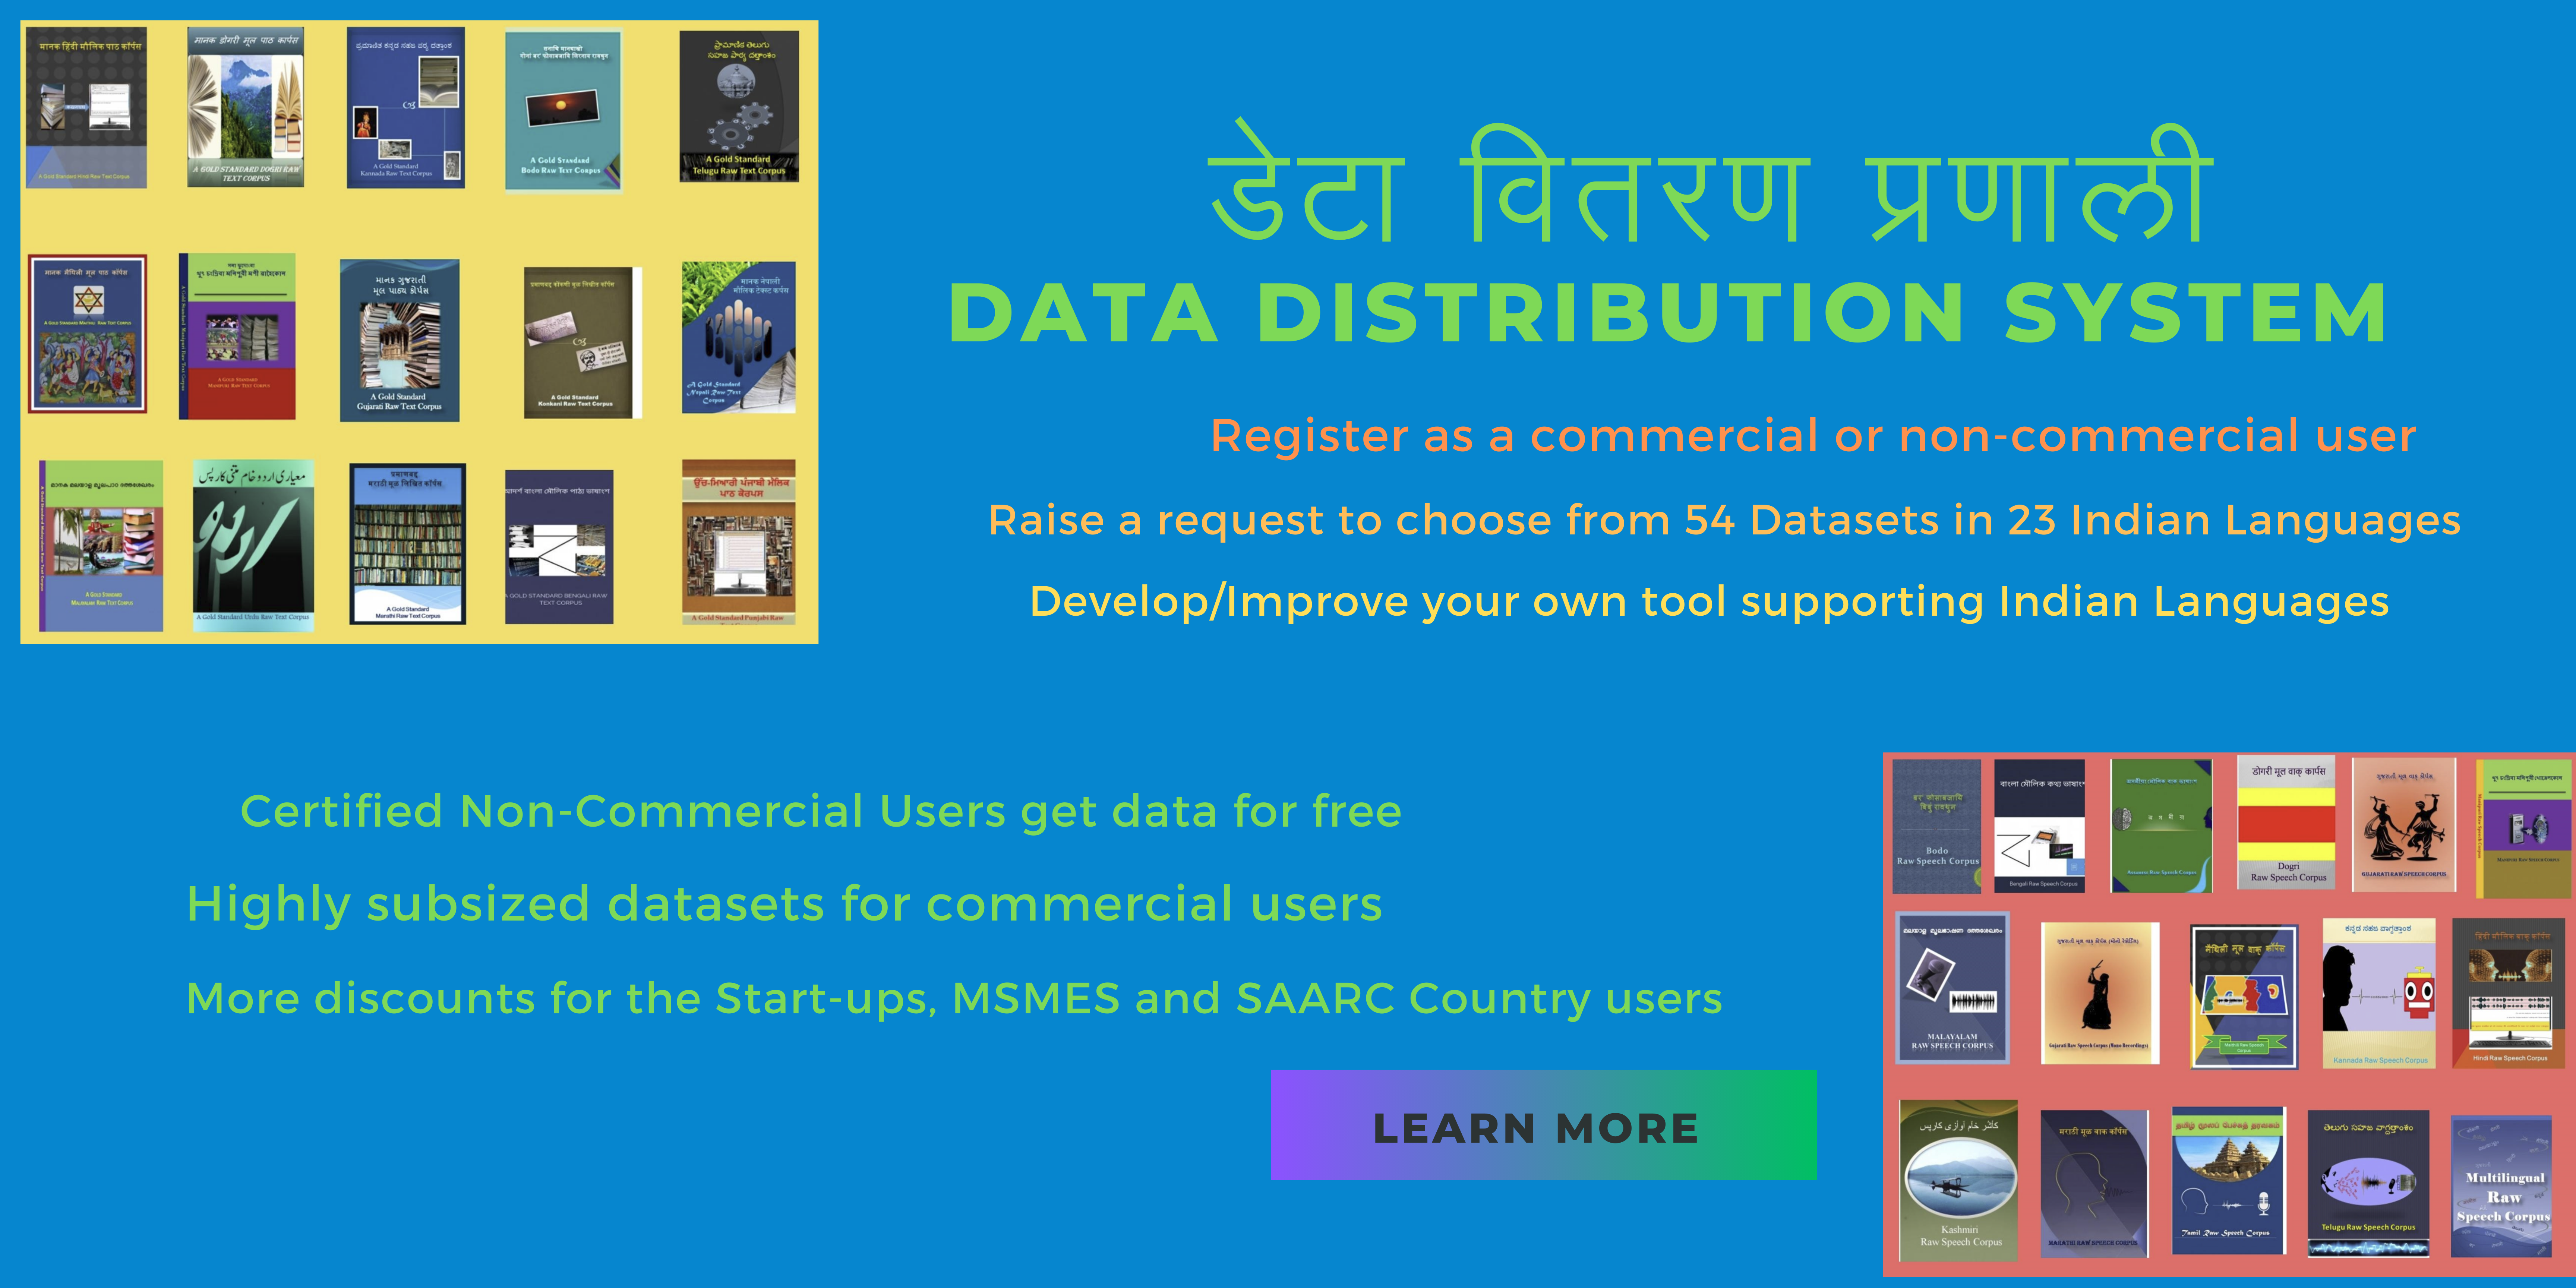 Data distribution system poster